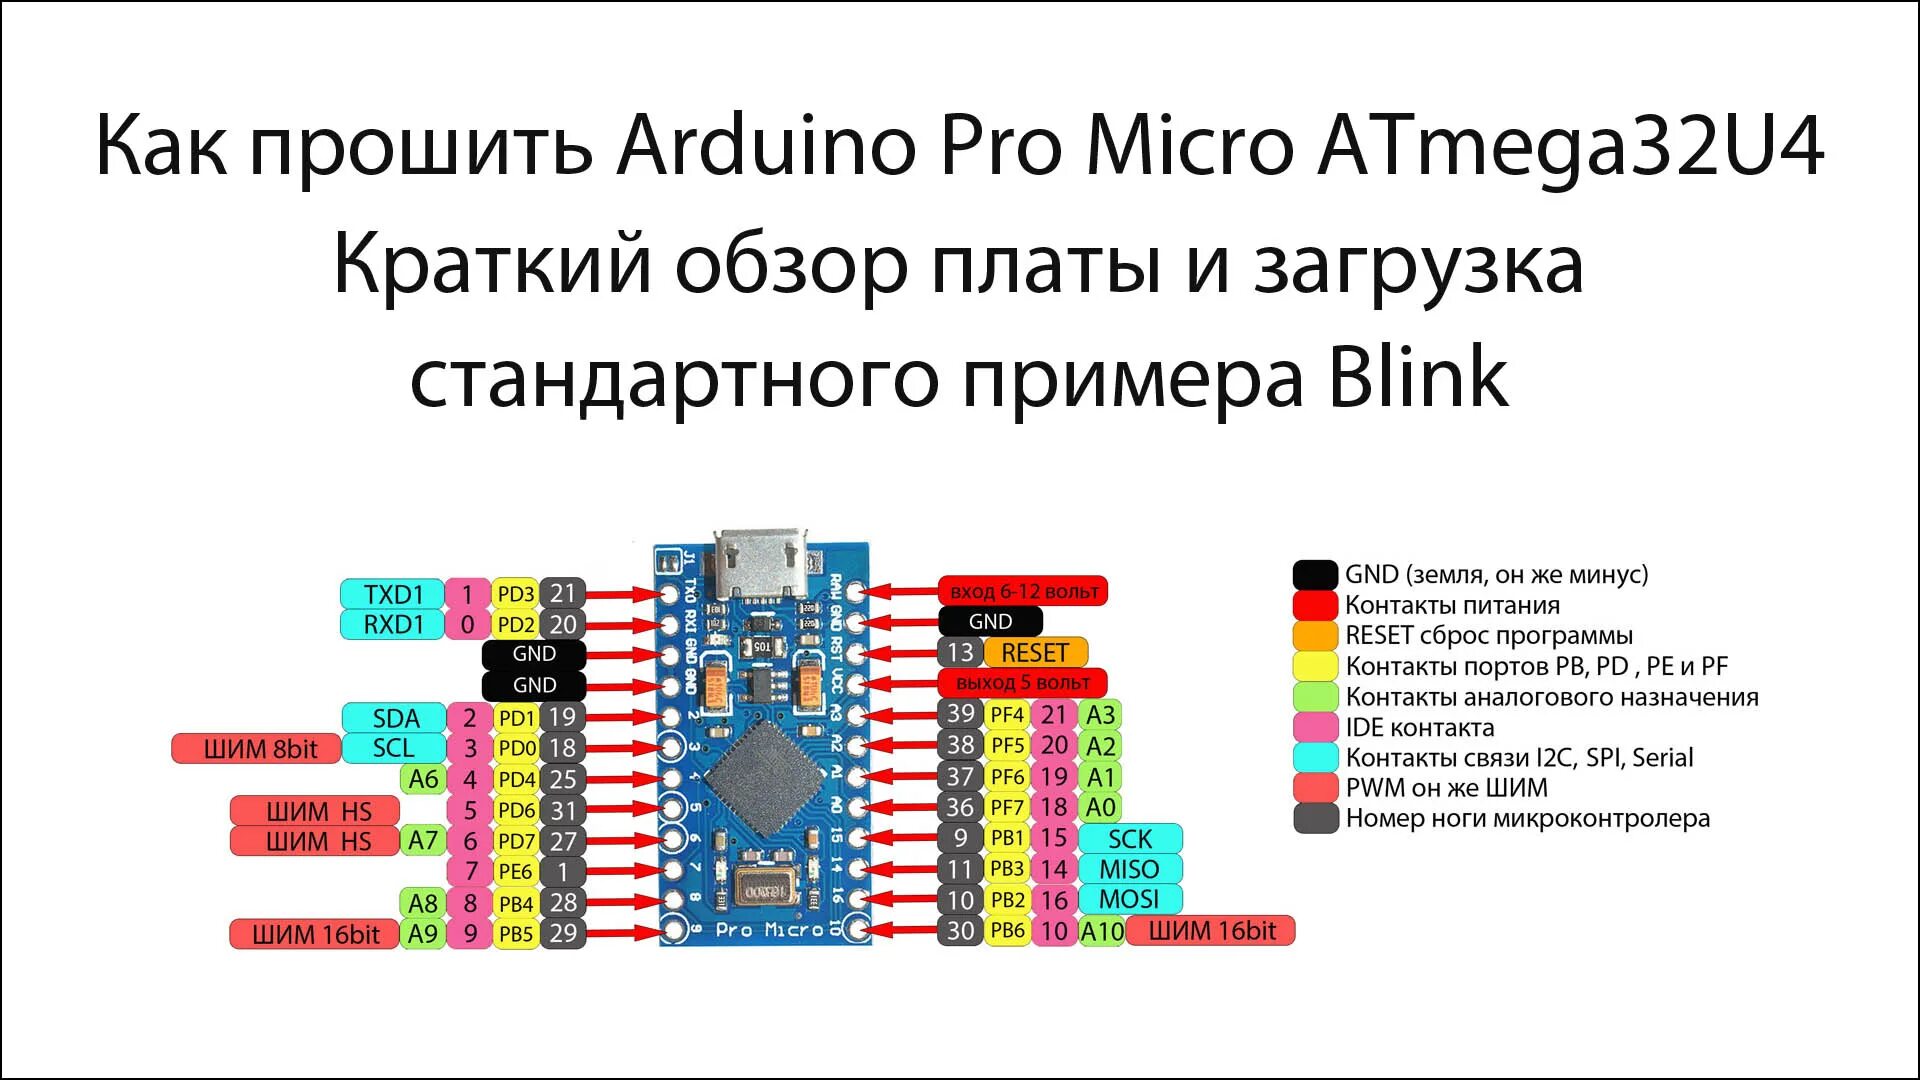 Прошивка микро. Ардуино Pro Micro 32u4. Arduino Pro Micro на базе atmega32u4. Arduino Pro Micro PWM. Arduino Pro Micro atmega32u4 схема клавиатуры.